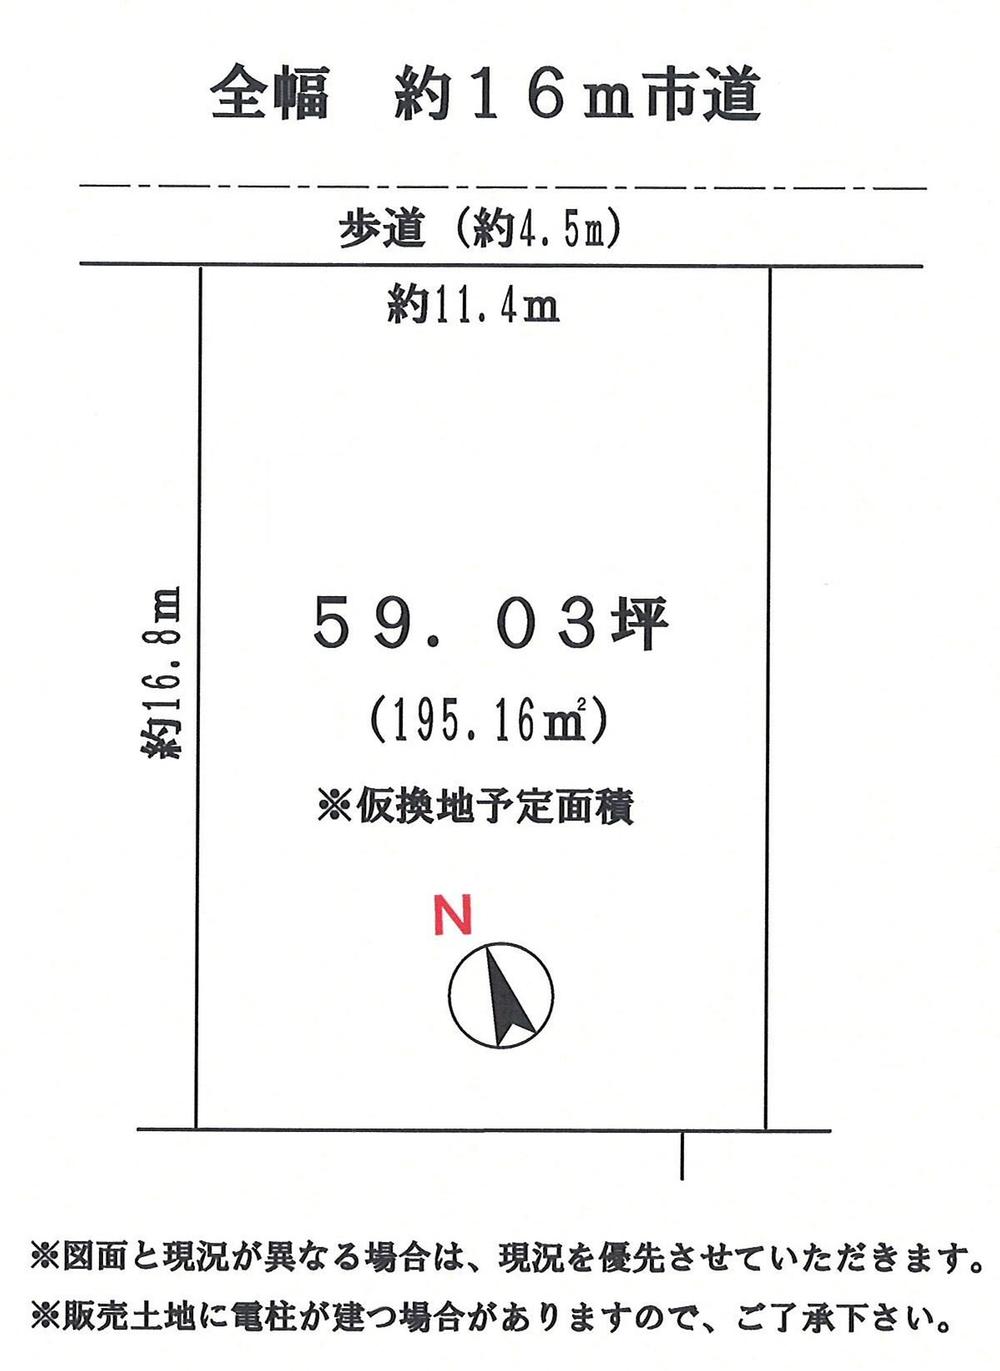 Compartment figure. Land price 17.5 million yen, Land area 195.16 sq m